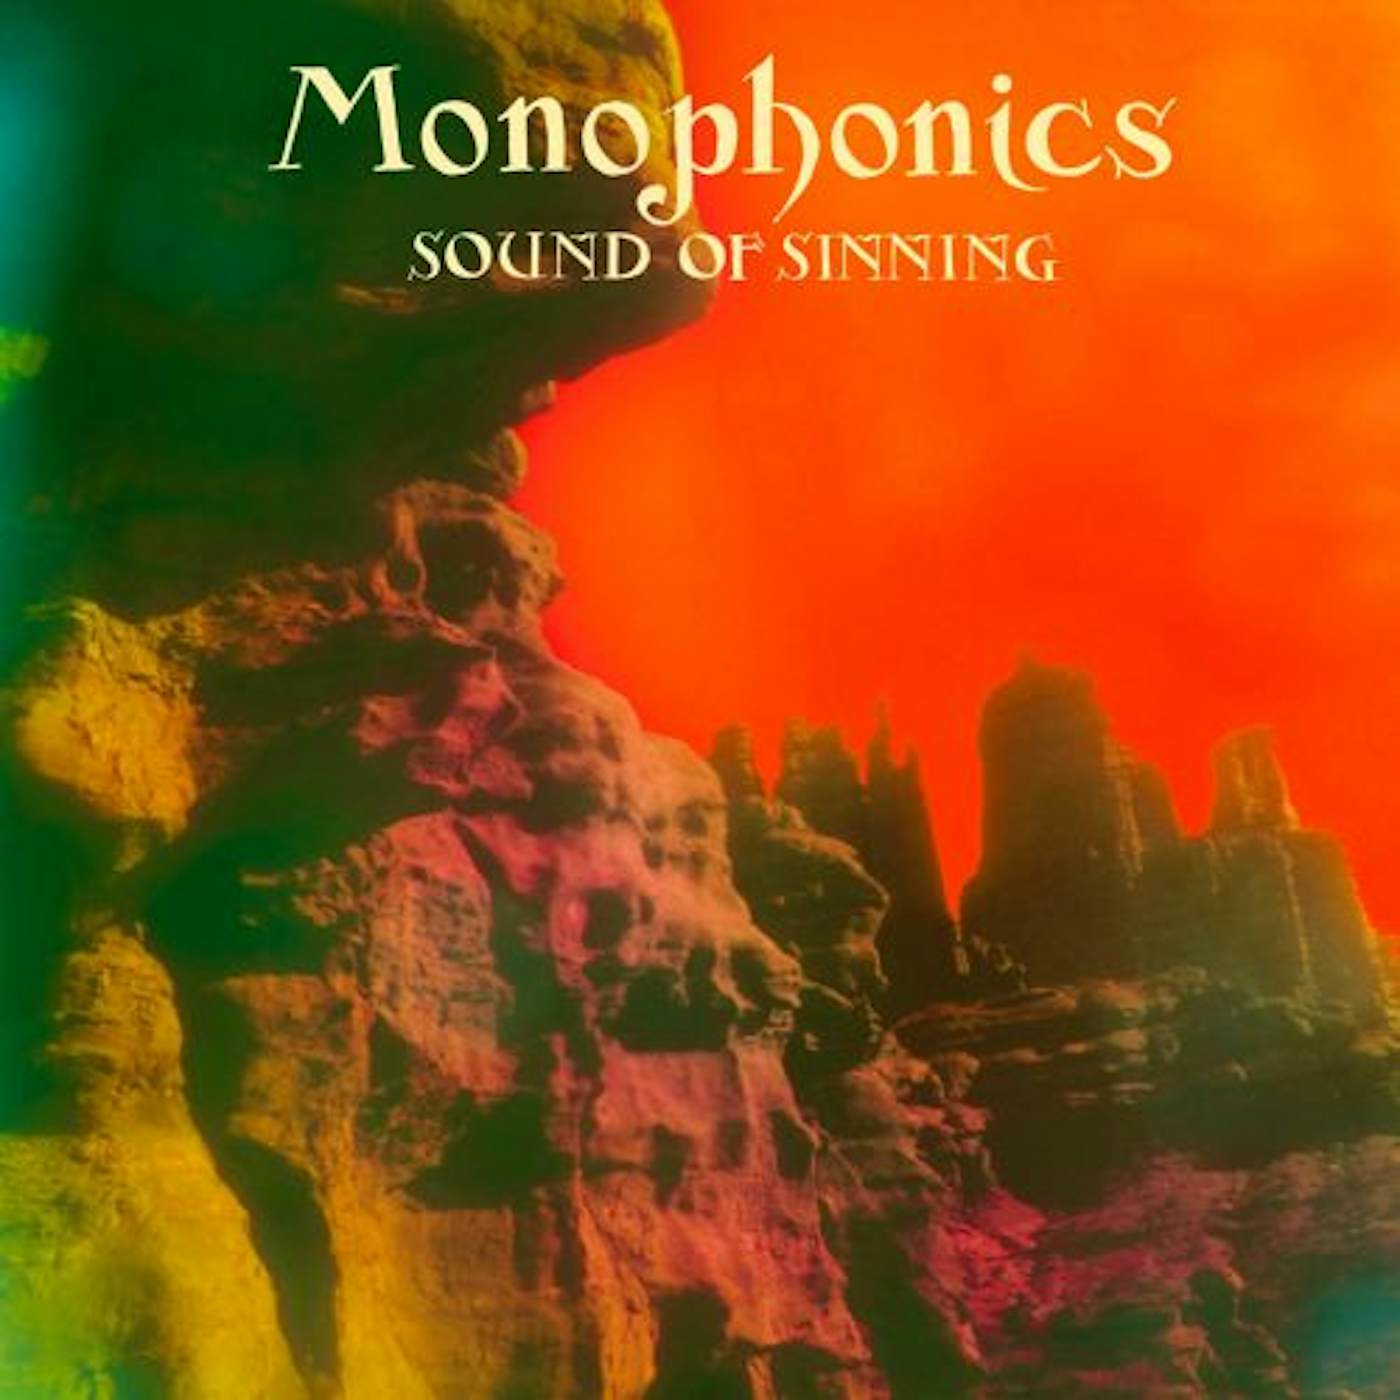 Monophonics Sound of Sinning Vinyl Record